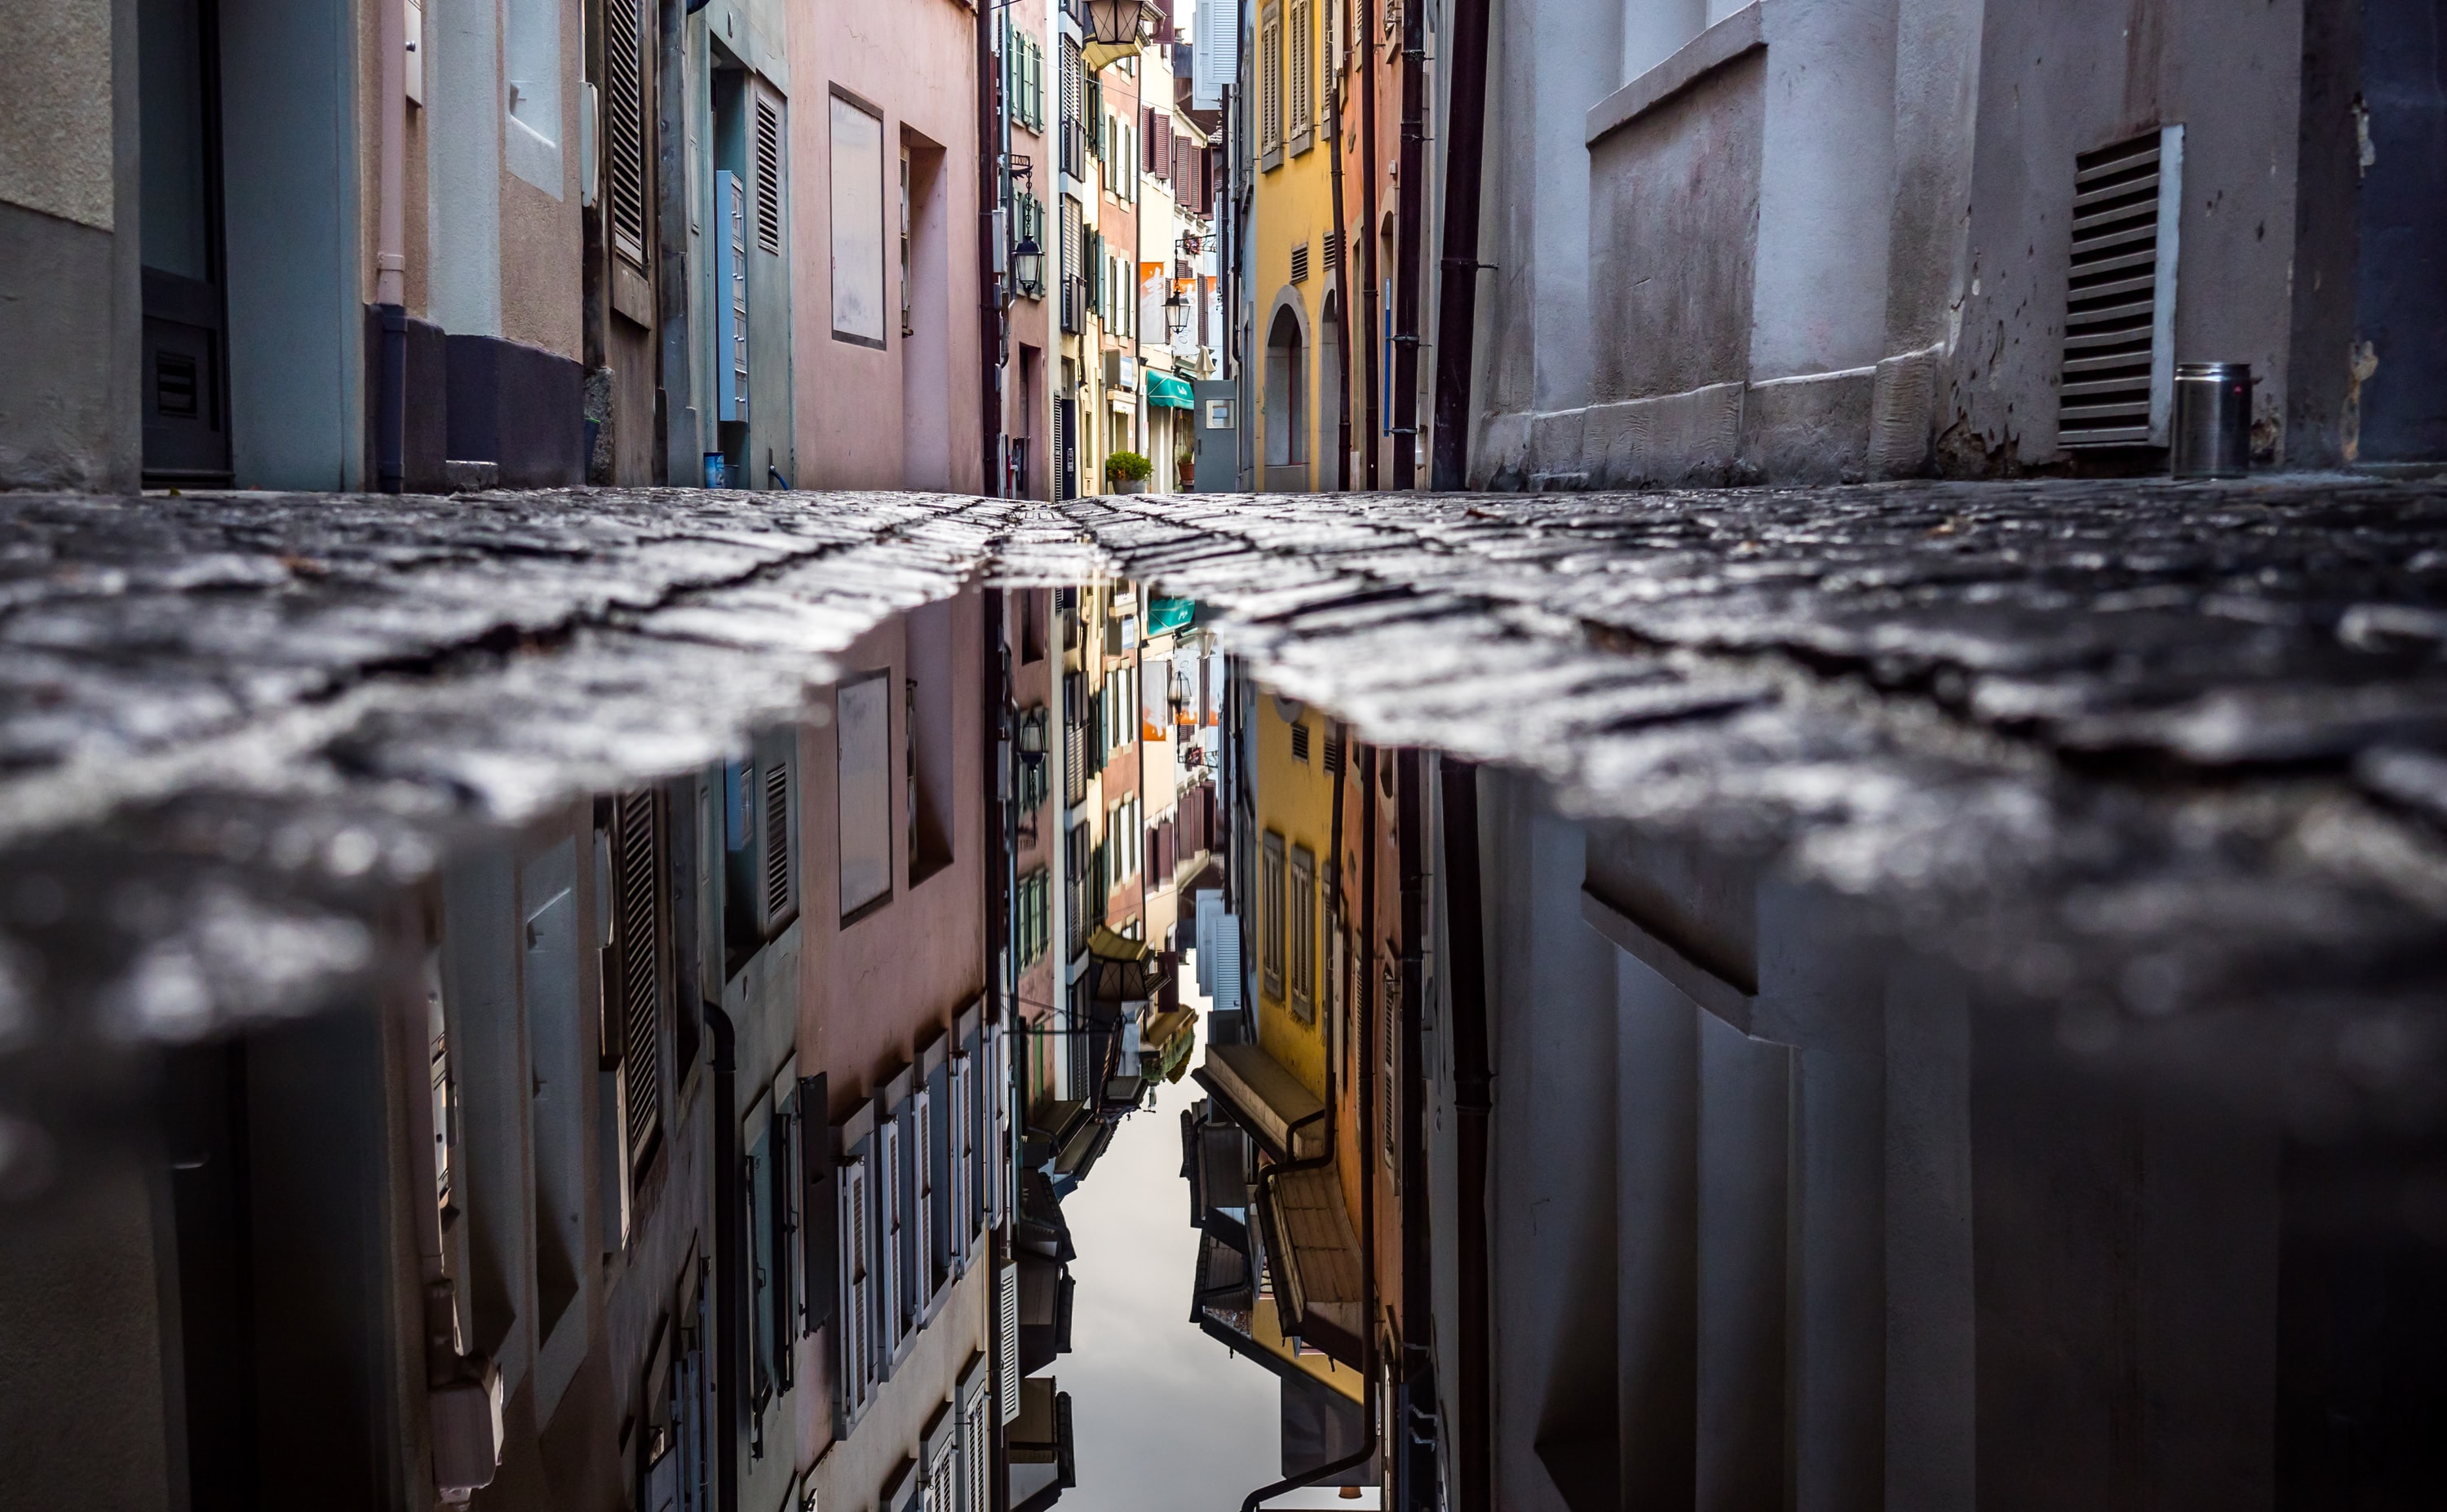 Mirrored alleyway in Switzerland.